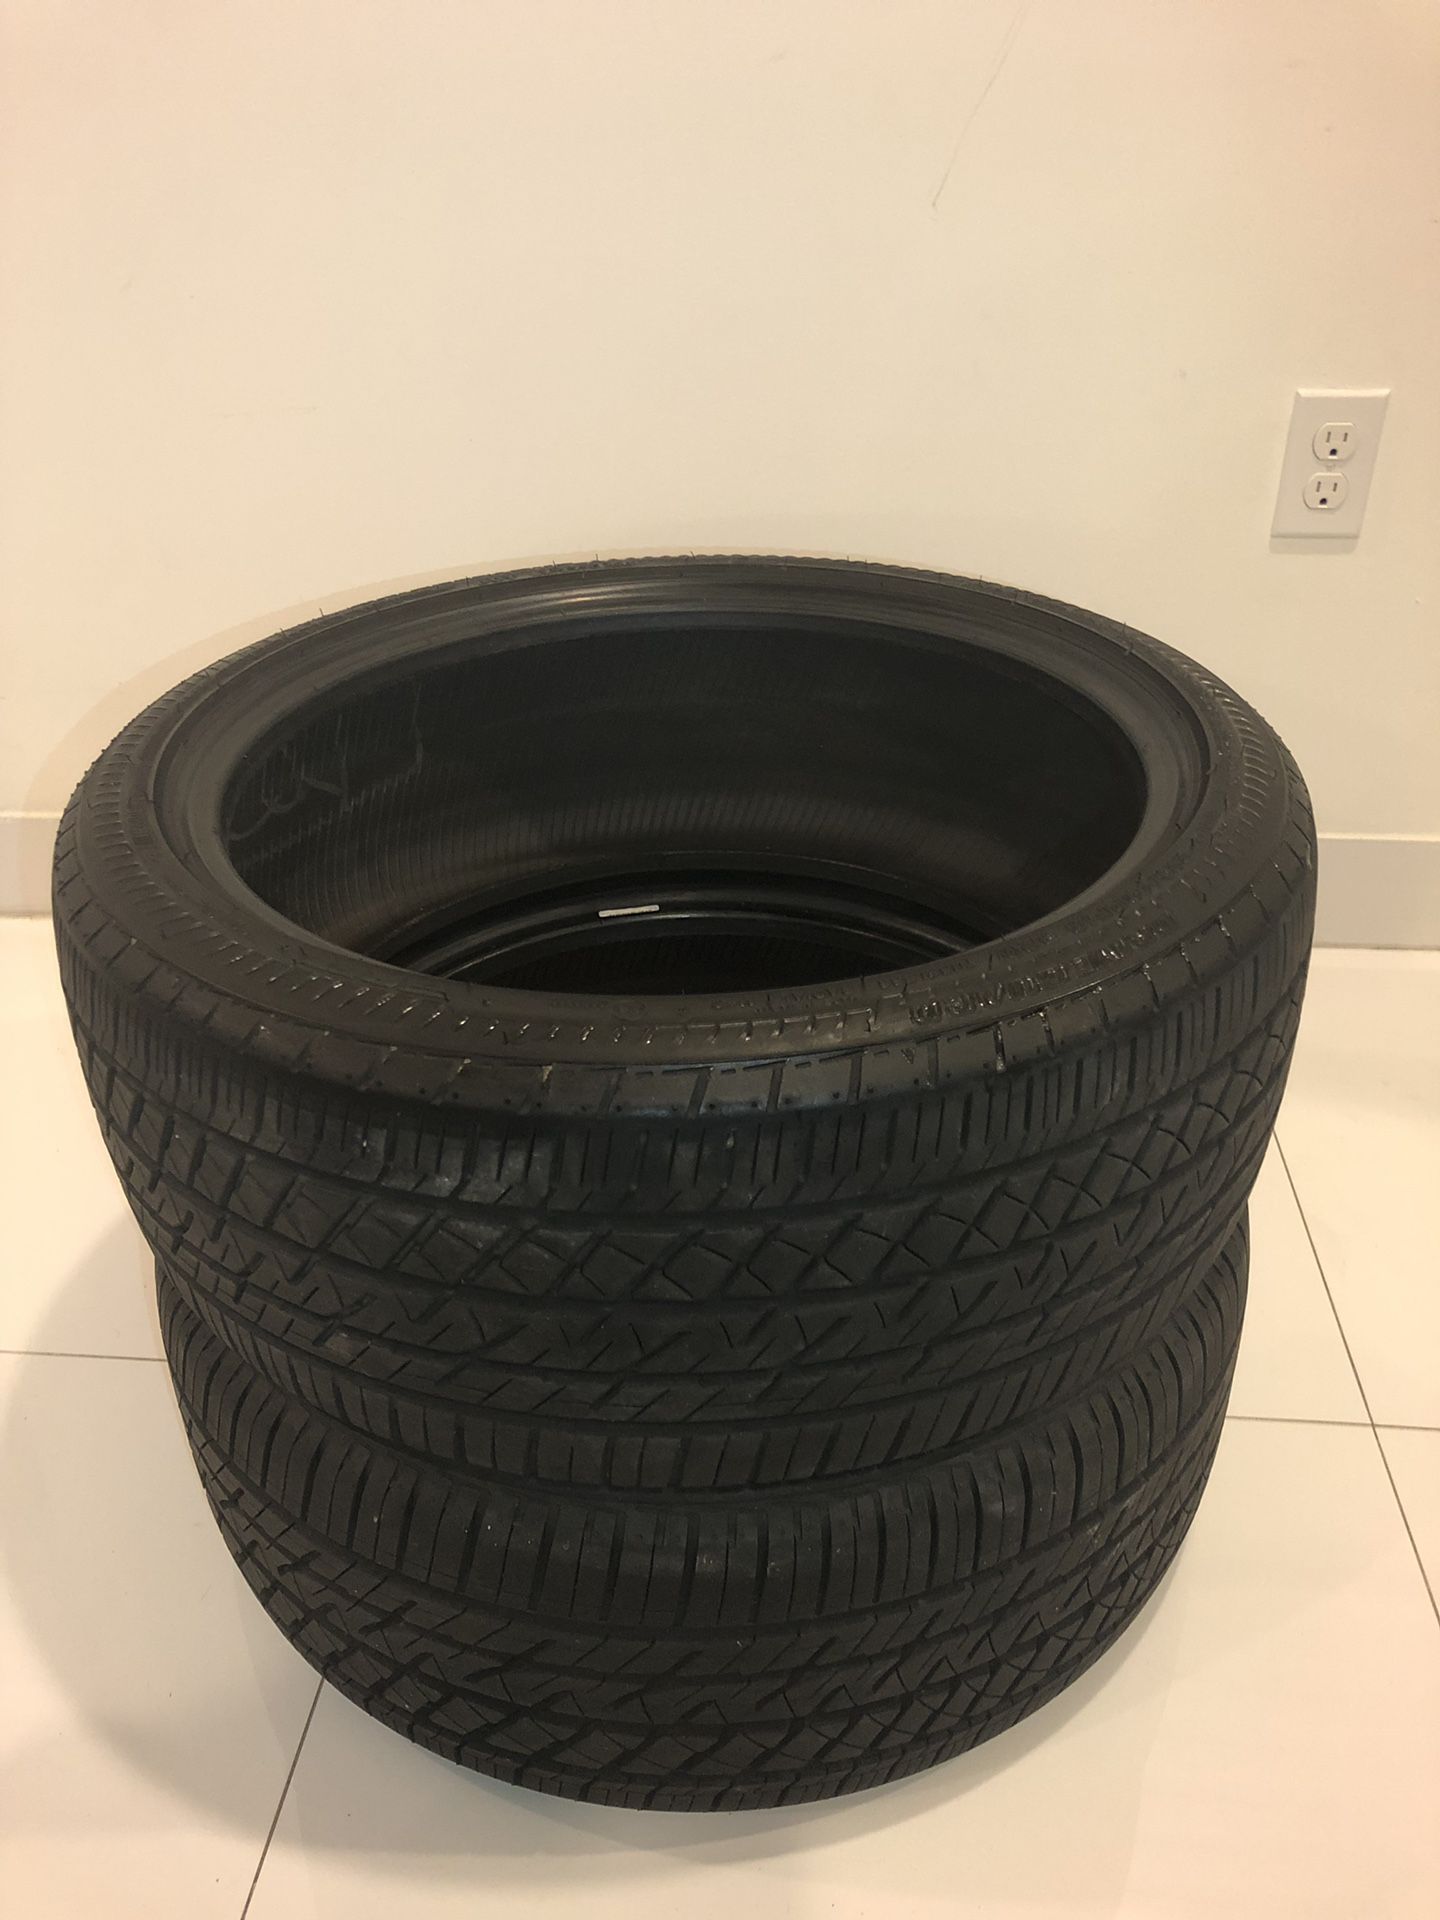 2 Bridgestone driveguard tires